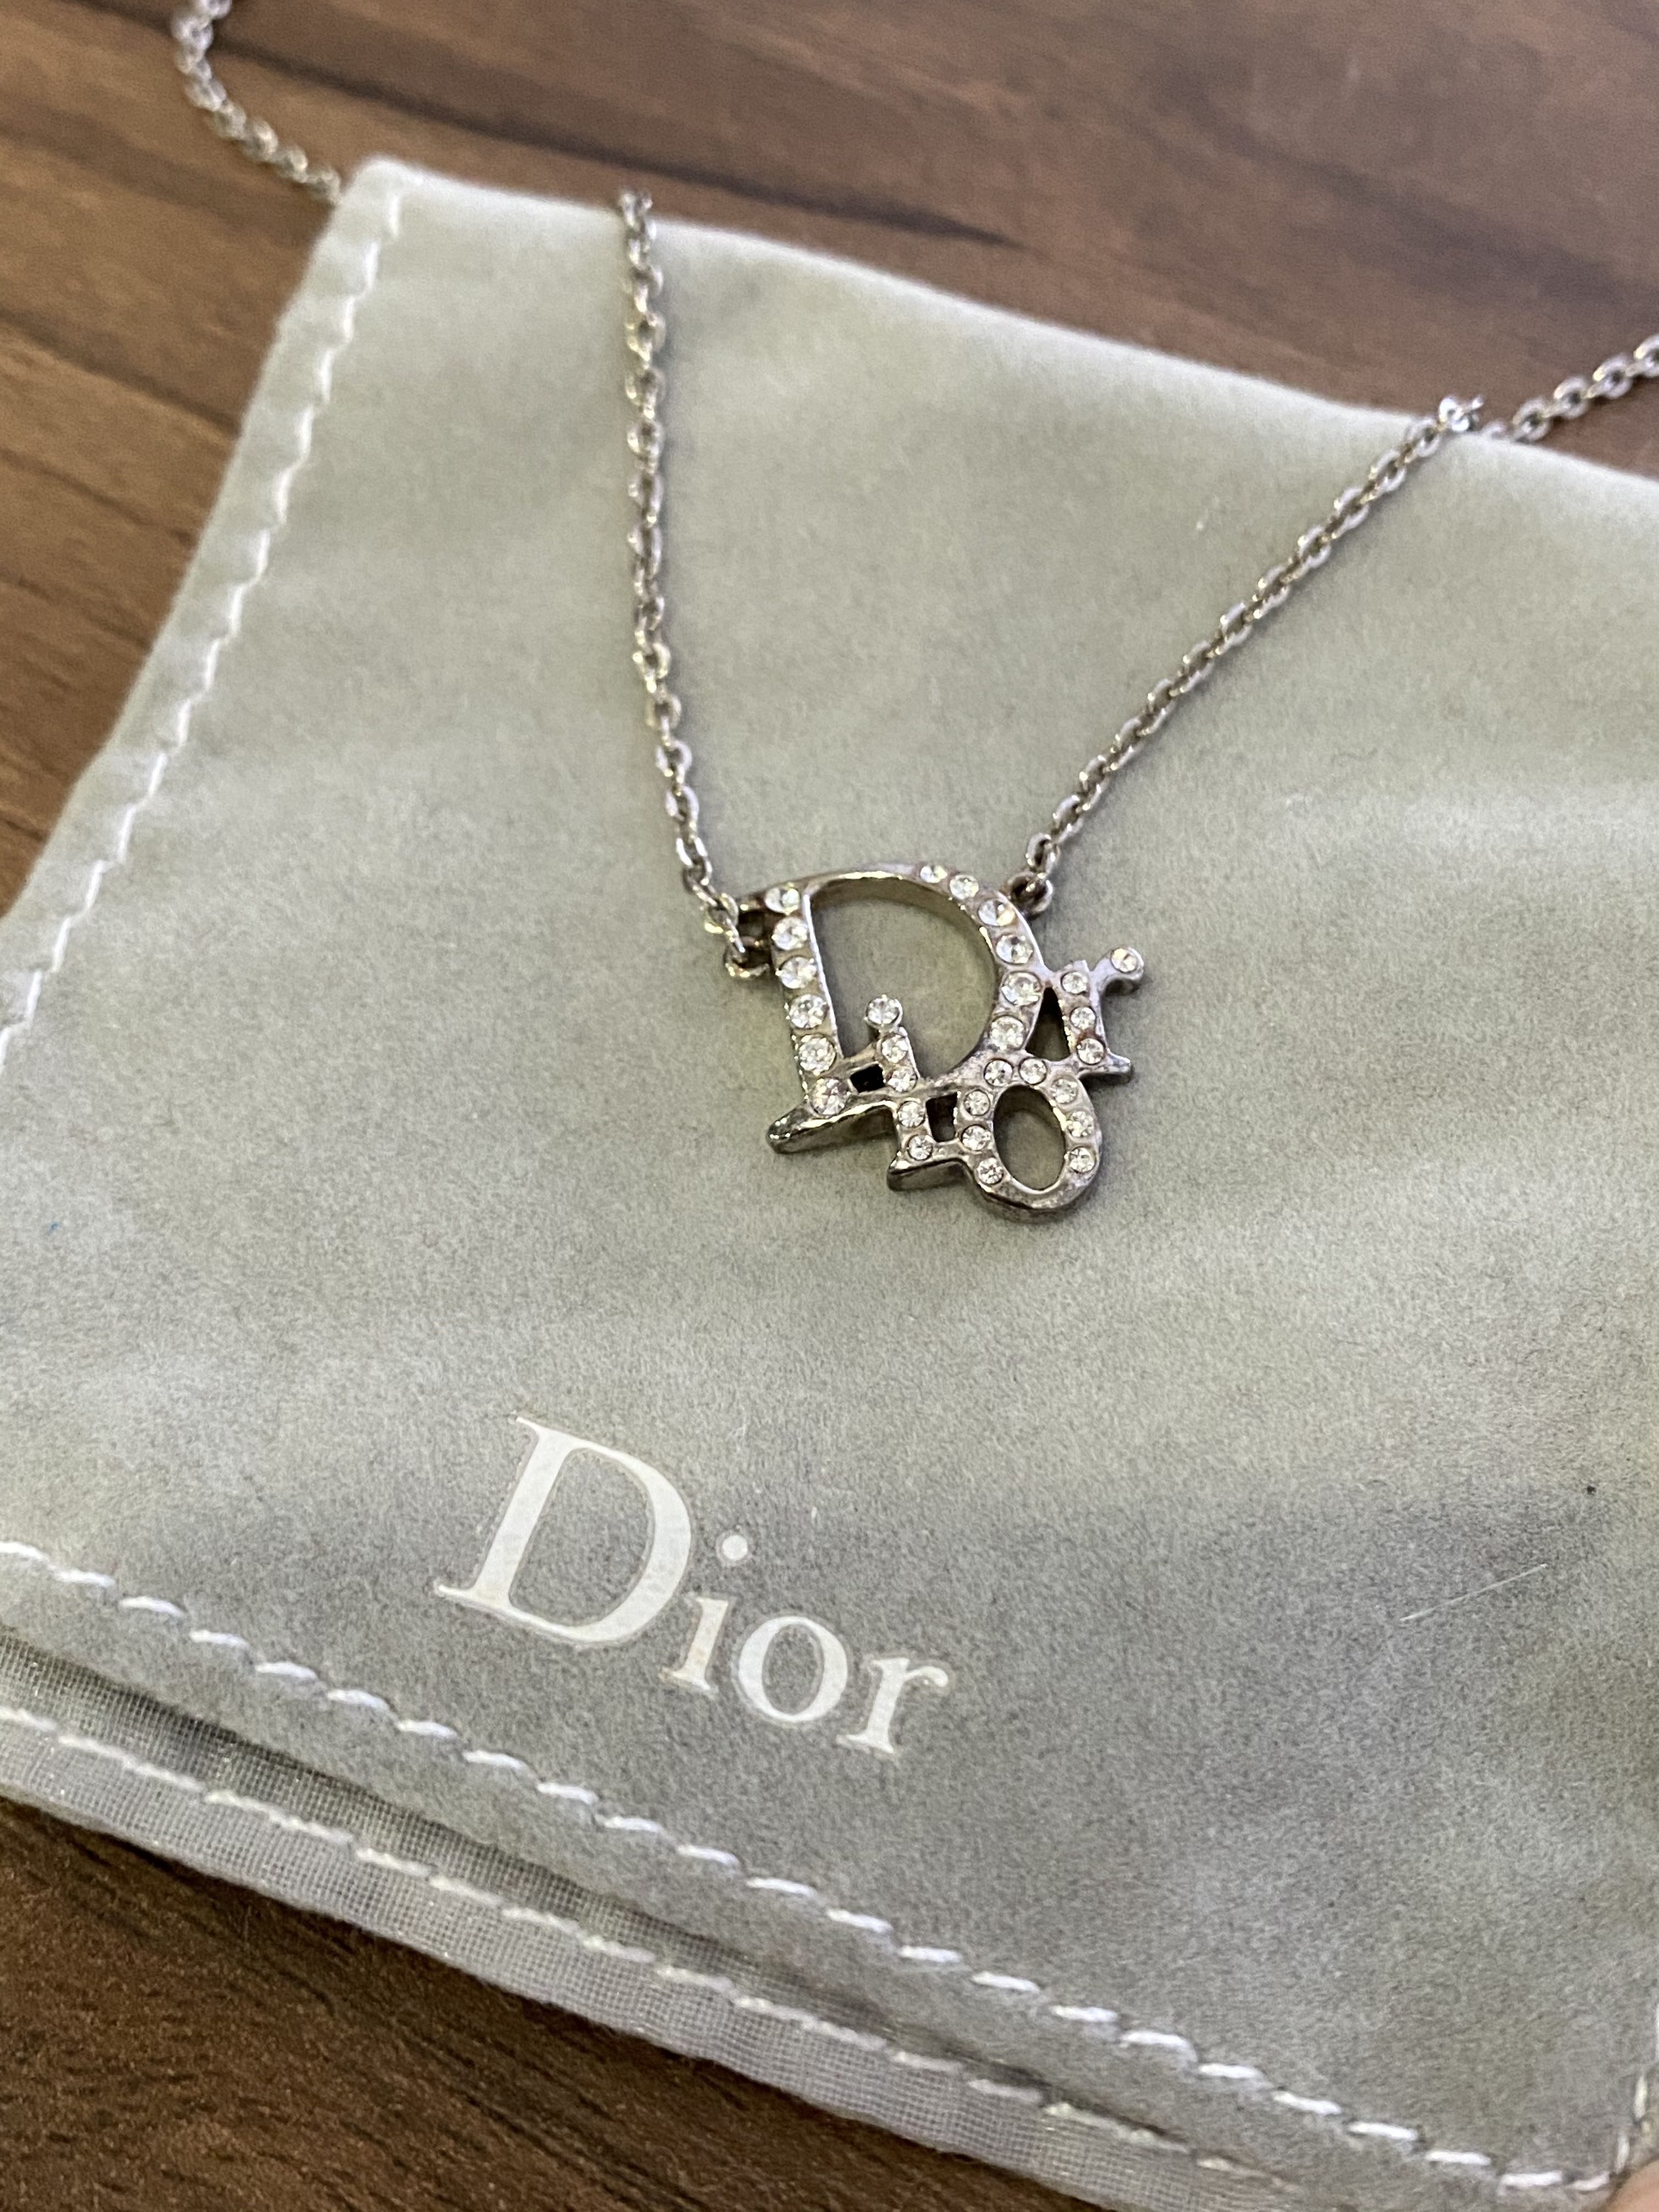 dior necklace price